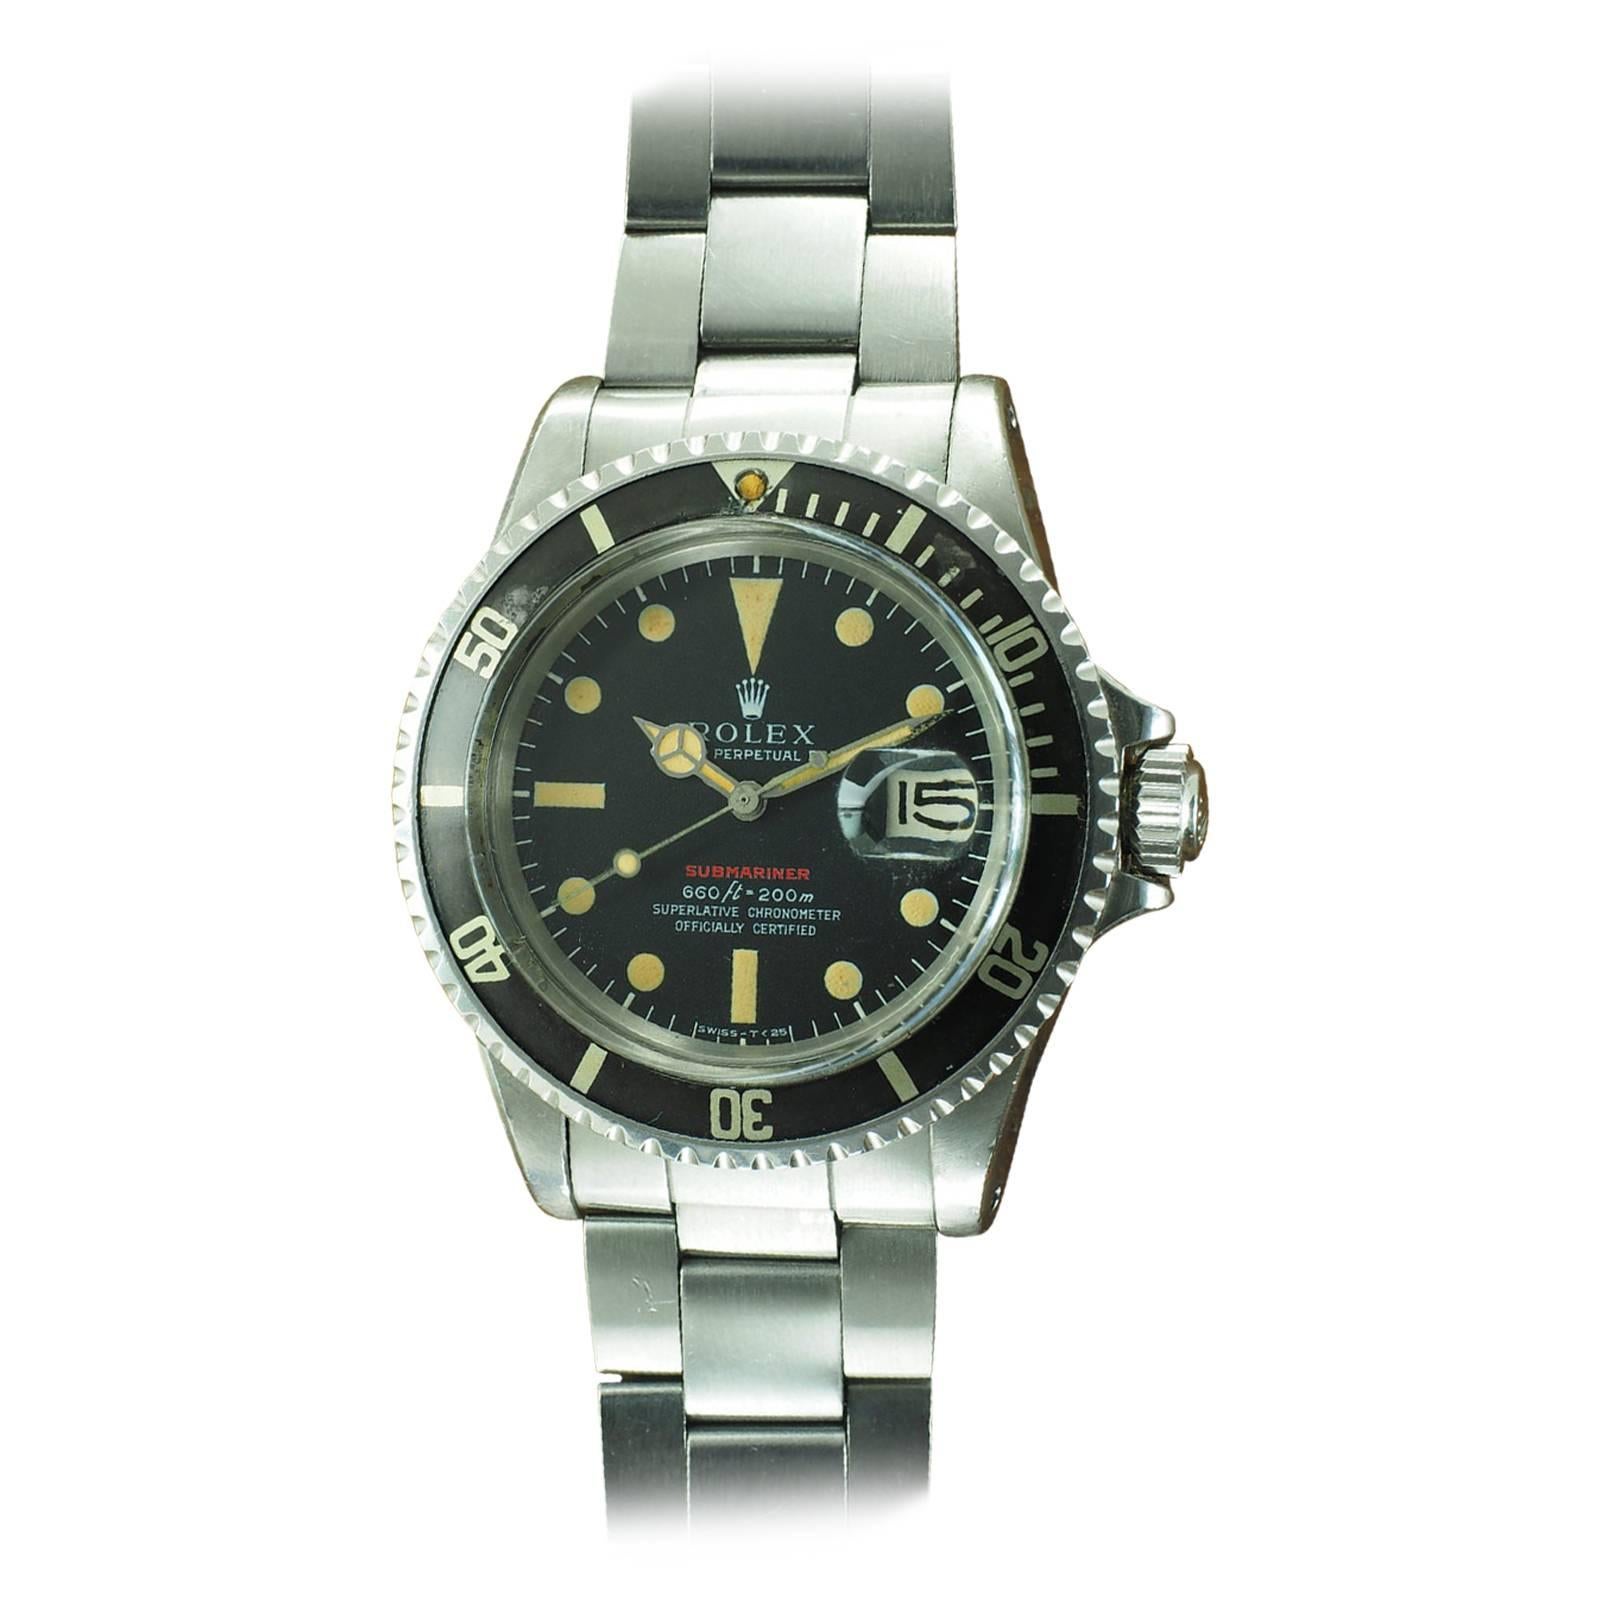 Rolex Stainless Steel Red Submariner Wristwatch Ref. 1680 For Sale